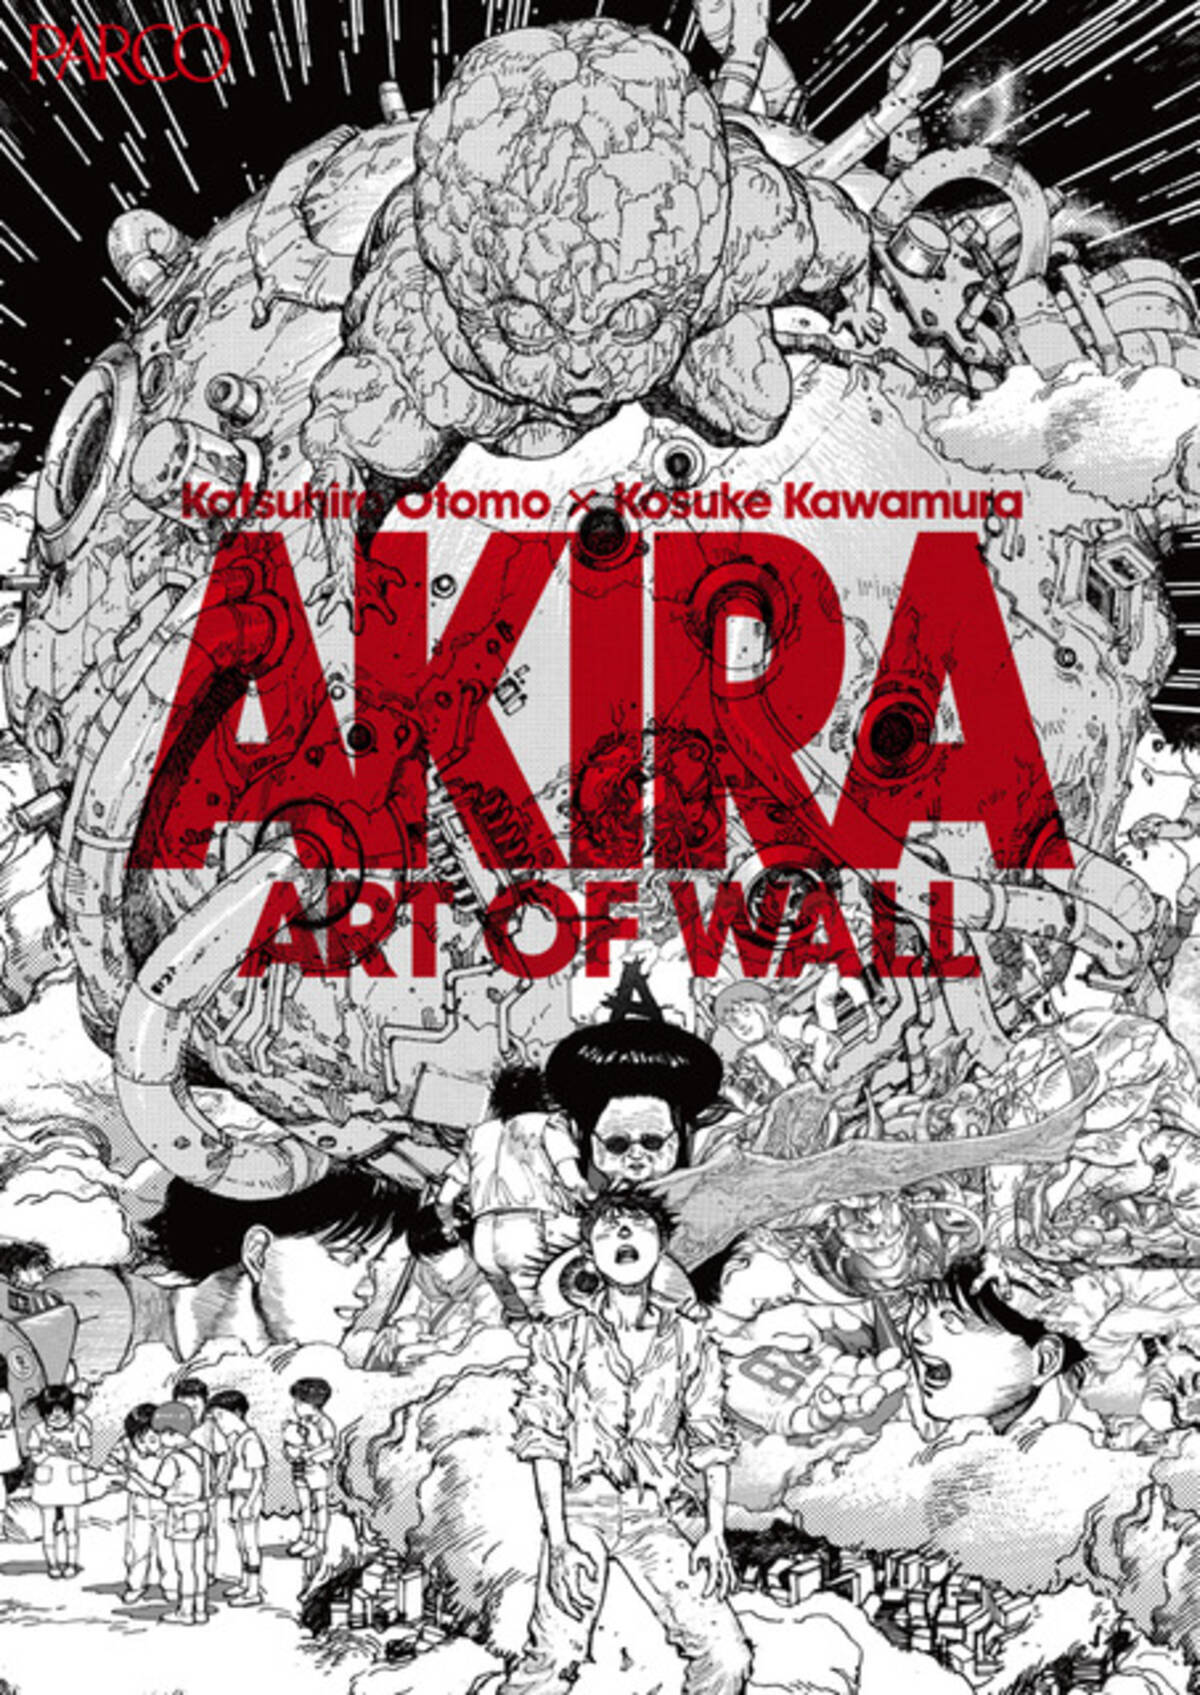 Akira 渋谷の Art Wall が蘇る 渋谷parco オープニングで展示会 コラボアイテム販売 19年9月19日 エキサイトニュース